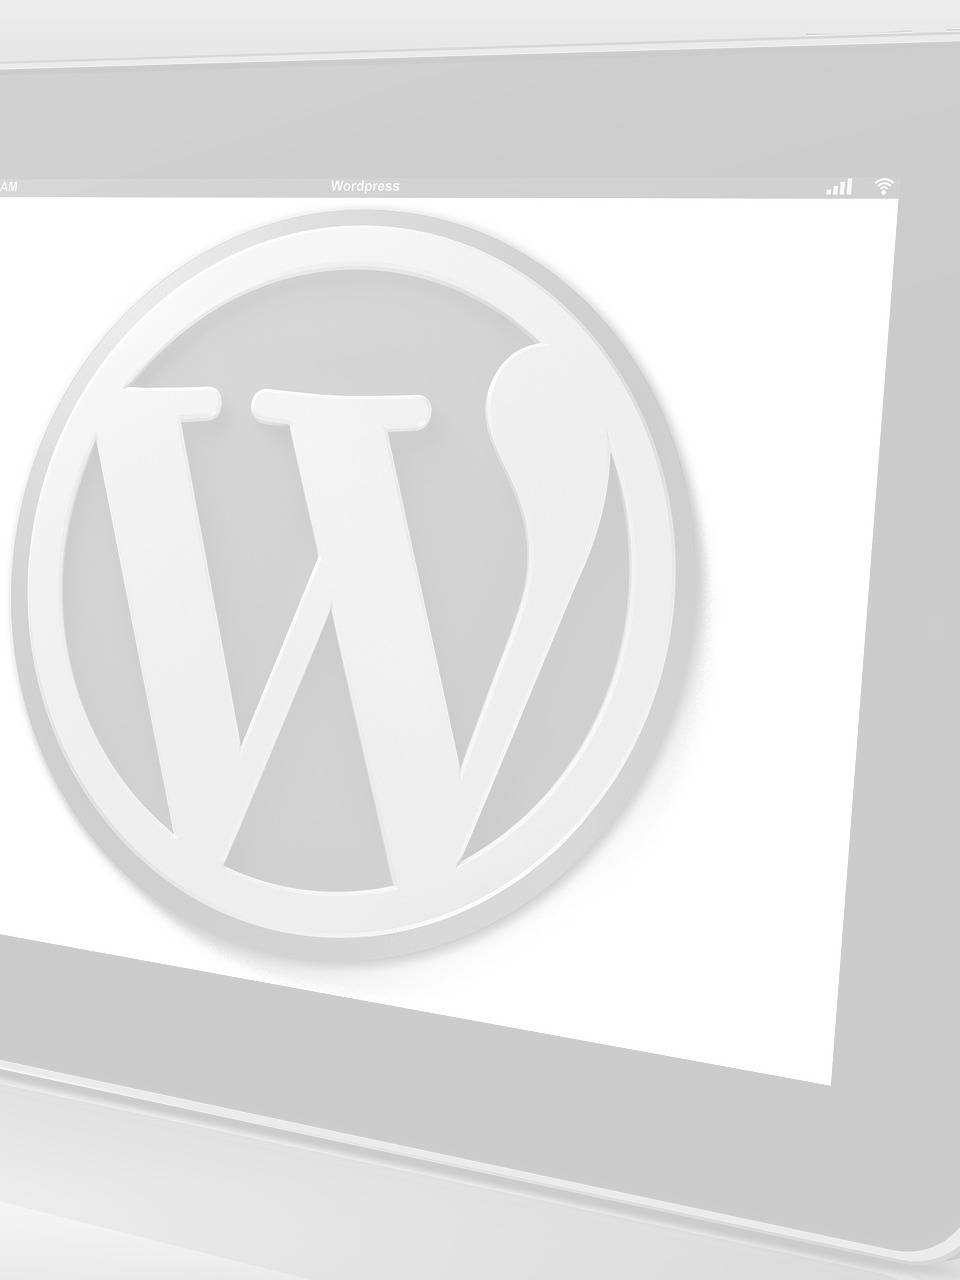 free blog for wordpress web design